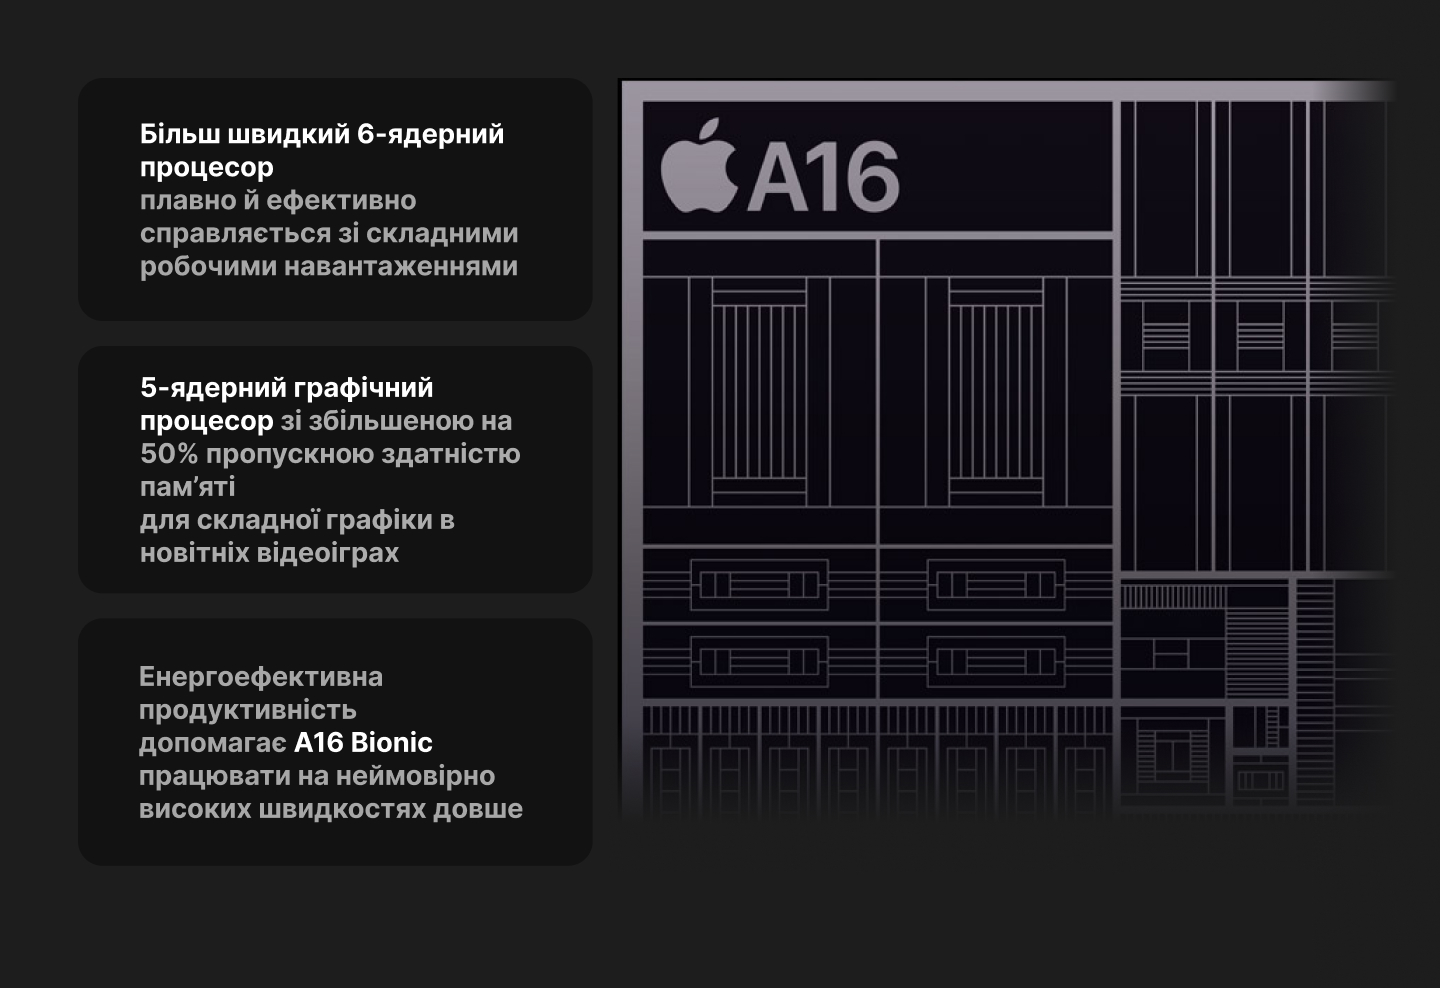 Apple iPhone 14 Pro 1TB (Deep Purple) (e-Sim)